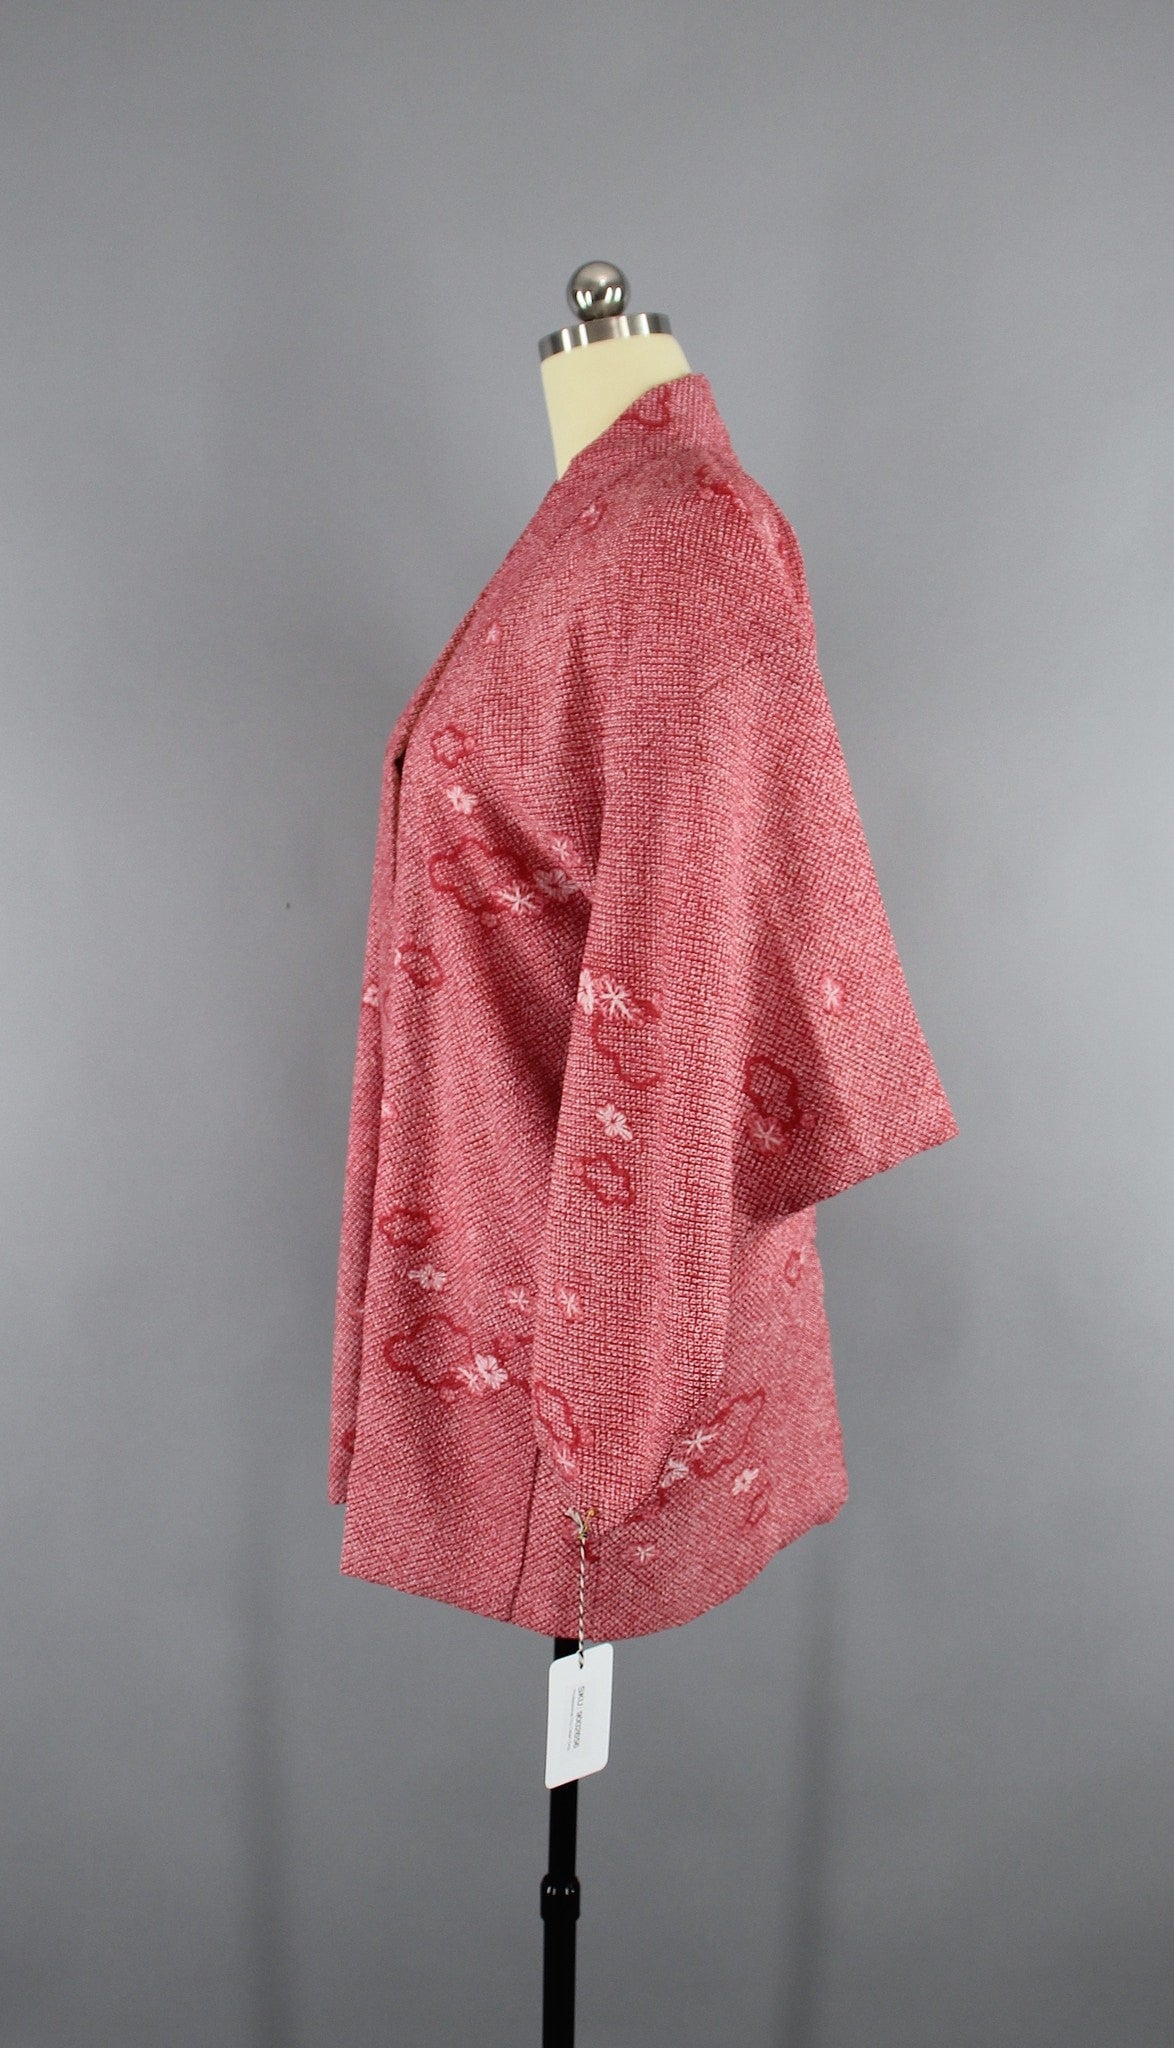 Vintage 1980s Haori Kimono Jacket Cardigan / Maroon Red Shibori Print - ThisBlueBird